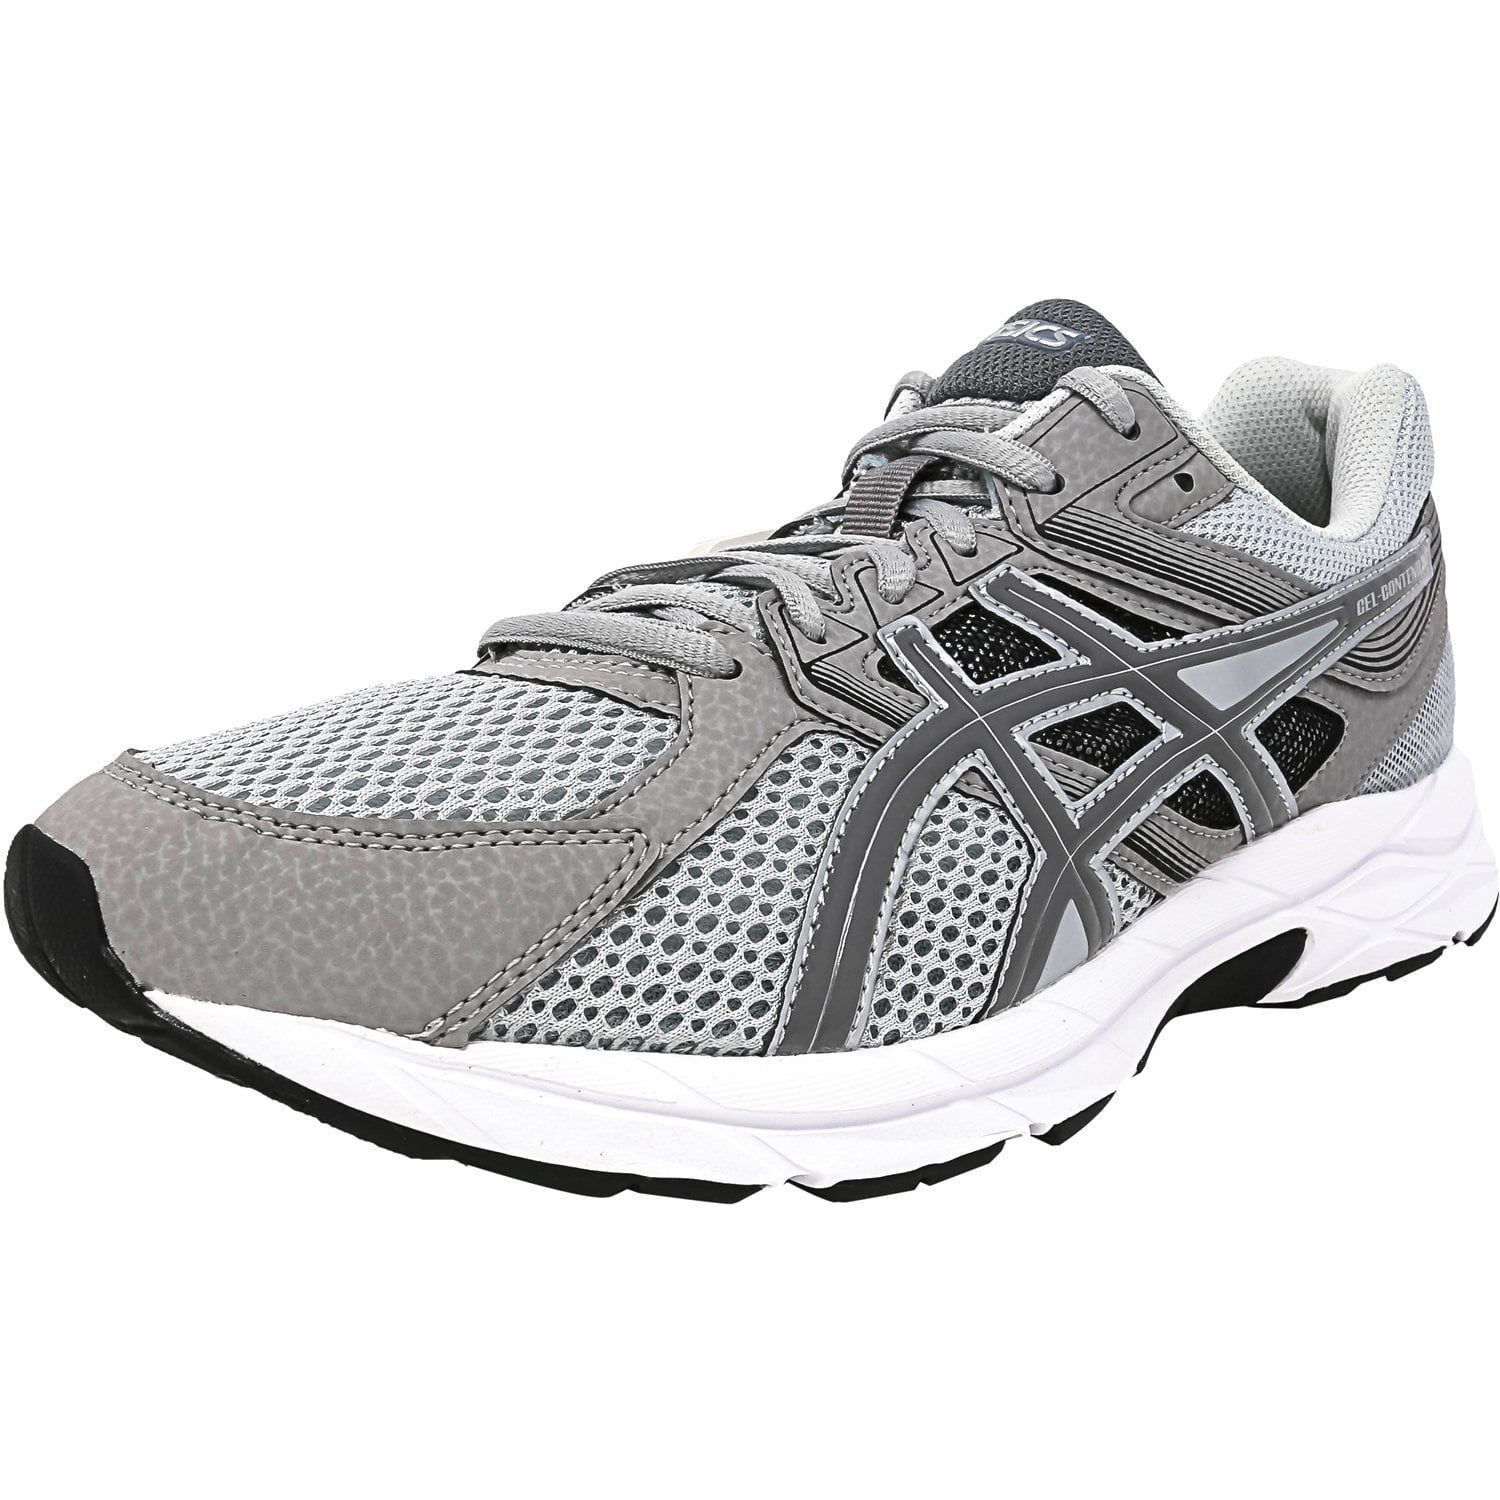 light grey running shoes